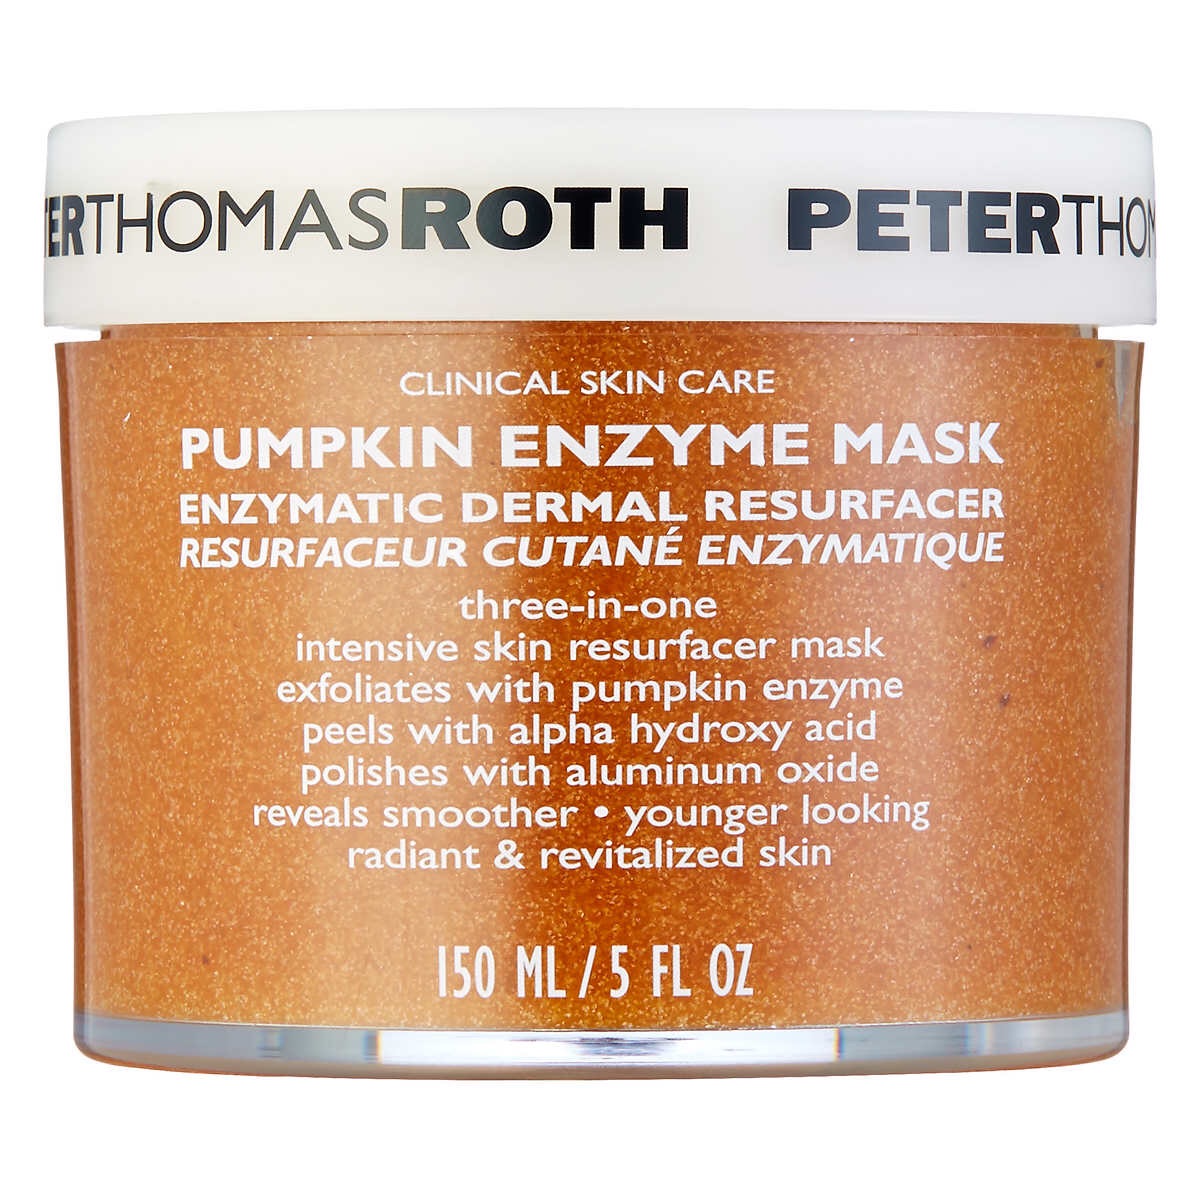 彼得罗夫南瓜酵素面膜 Peter Thomas Roth Pumpkin Enzyme Mask, 5 oz.